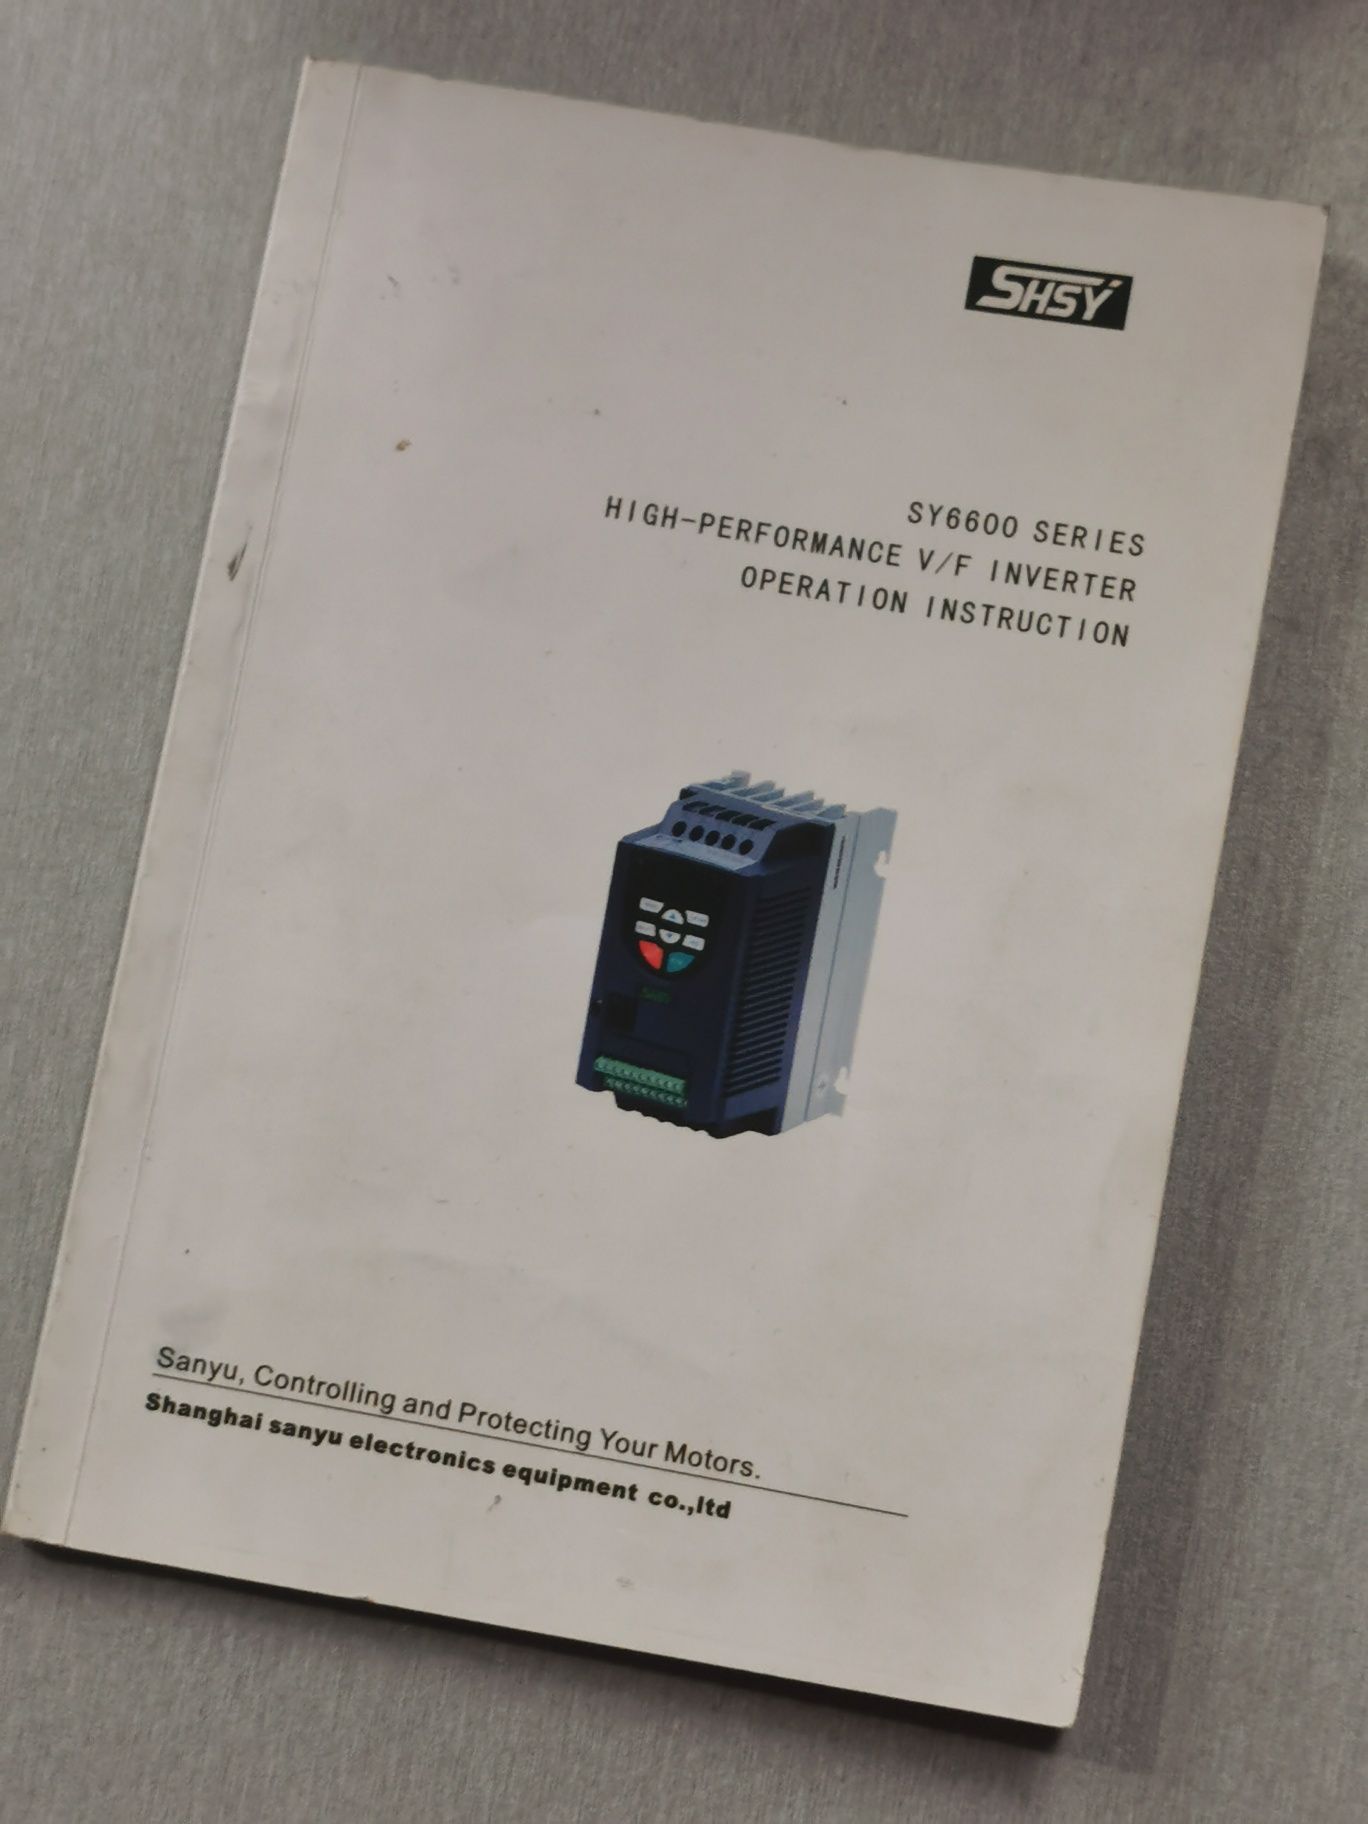 Inwerter SHSY SY6600 v/f control 1.5kW 7A 0-600 Hz